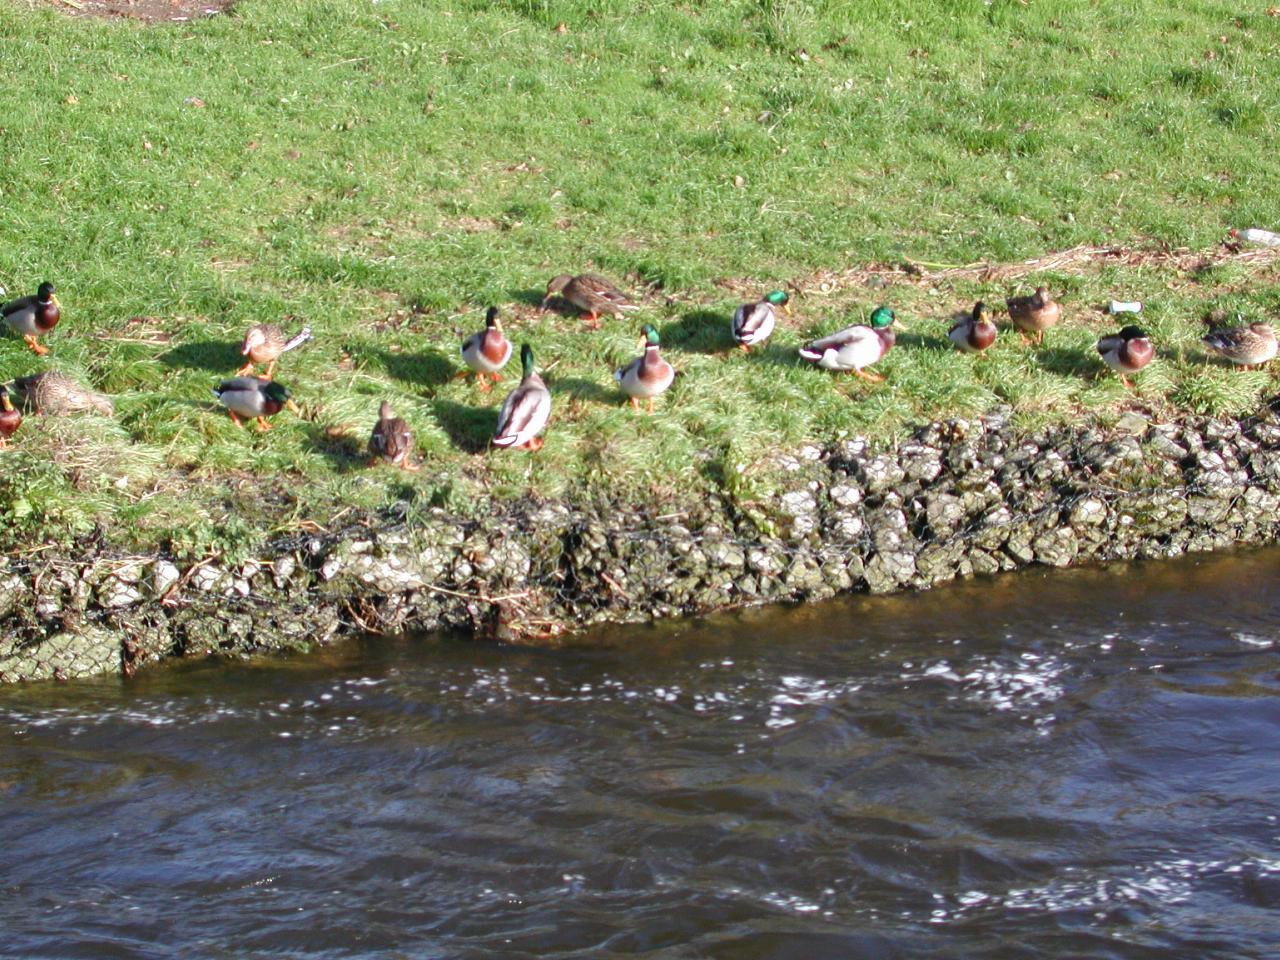 Bandon River & ducks